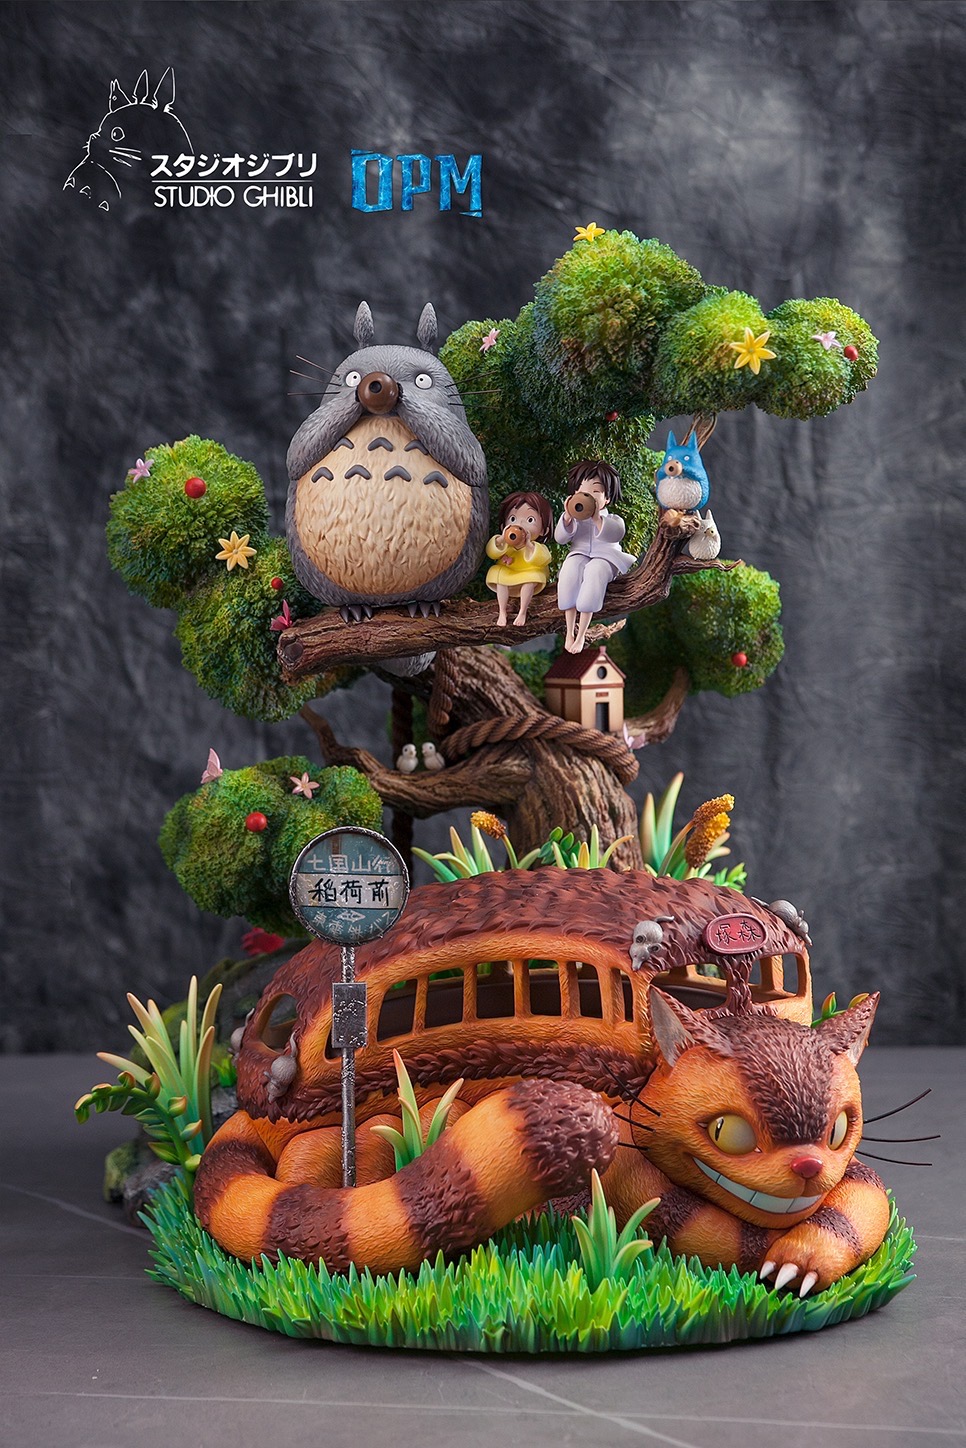 Totoro โทโทโร่ “ Studio Ghibli “ by OPM-Studio (มัดจำ) [[SOLD OUT]]